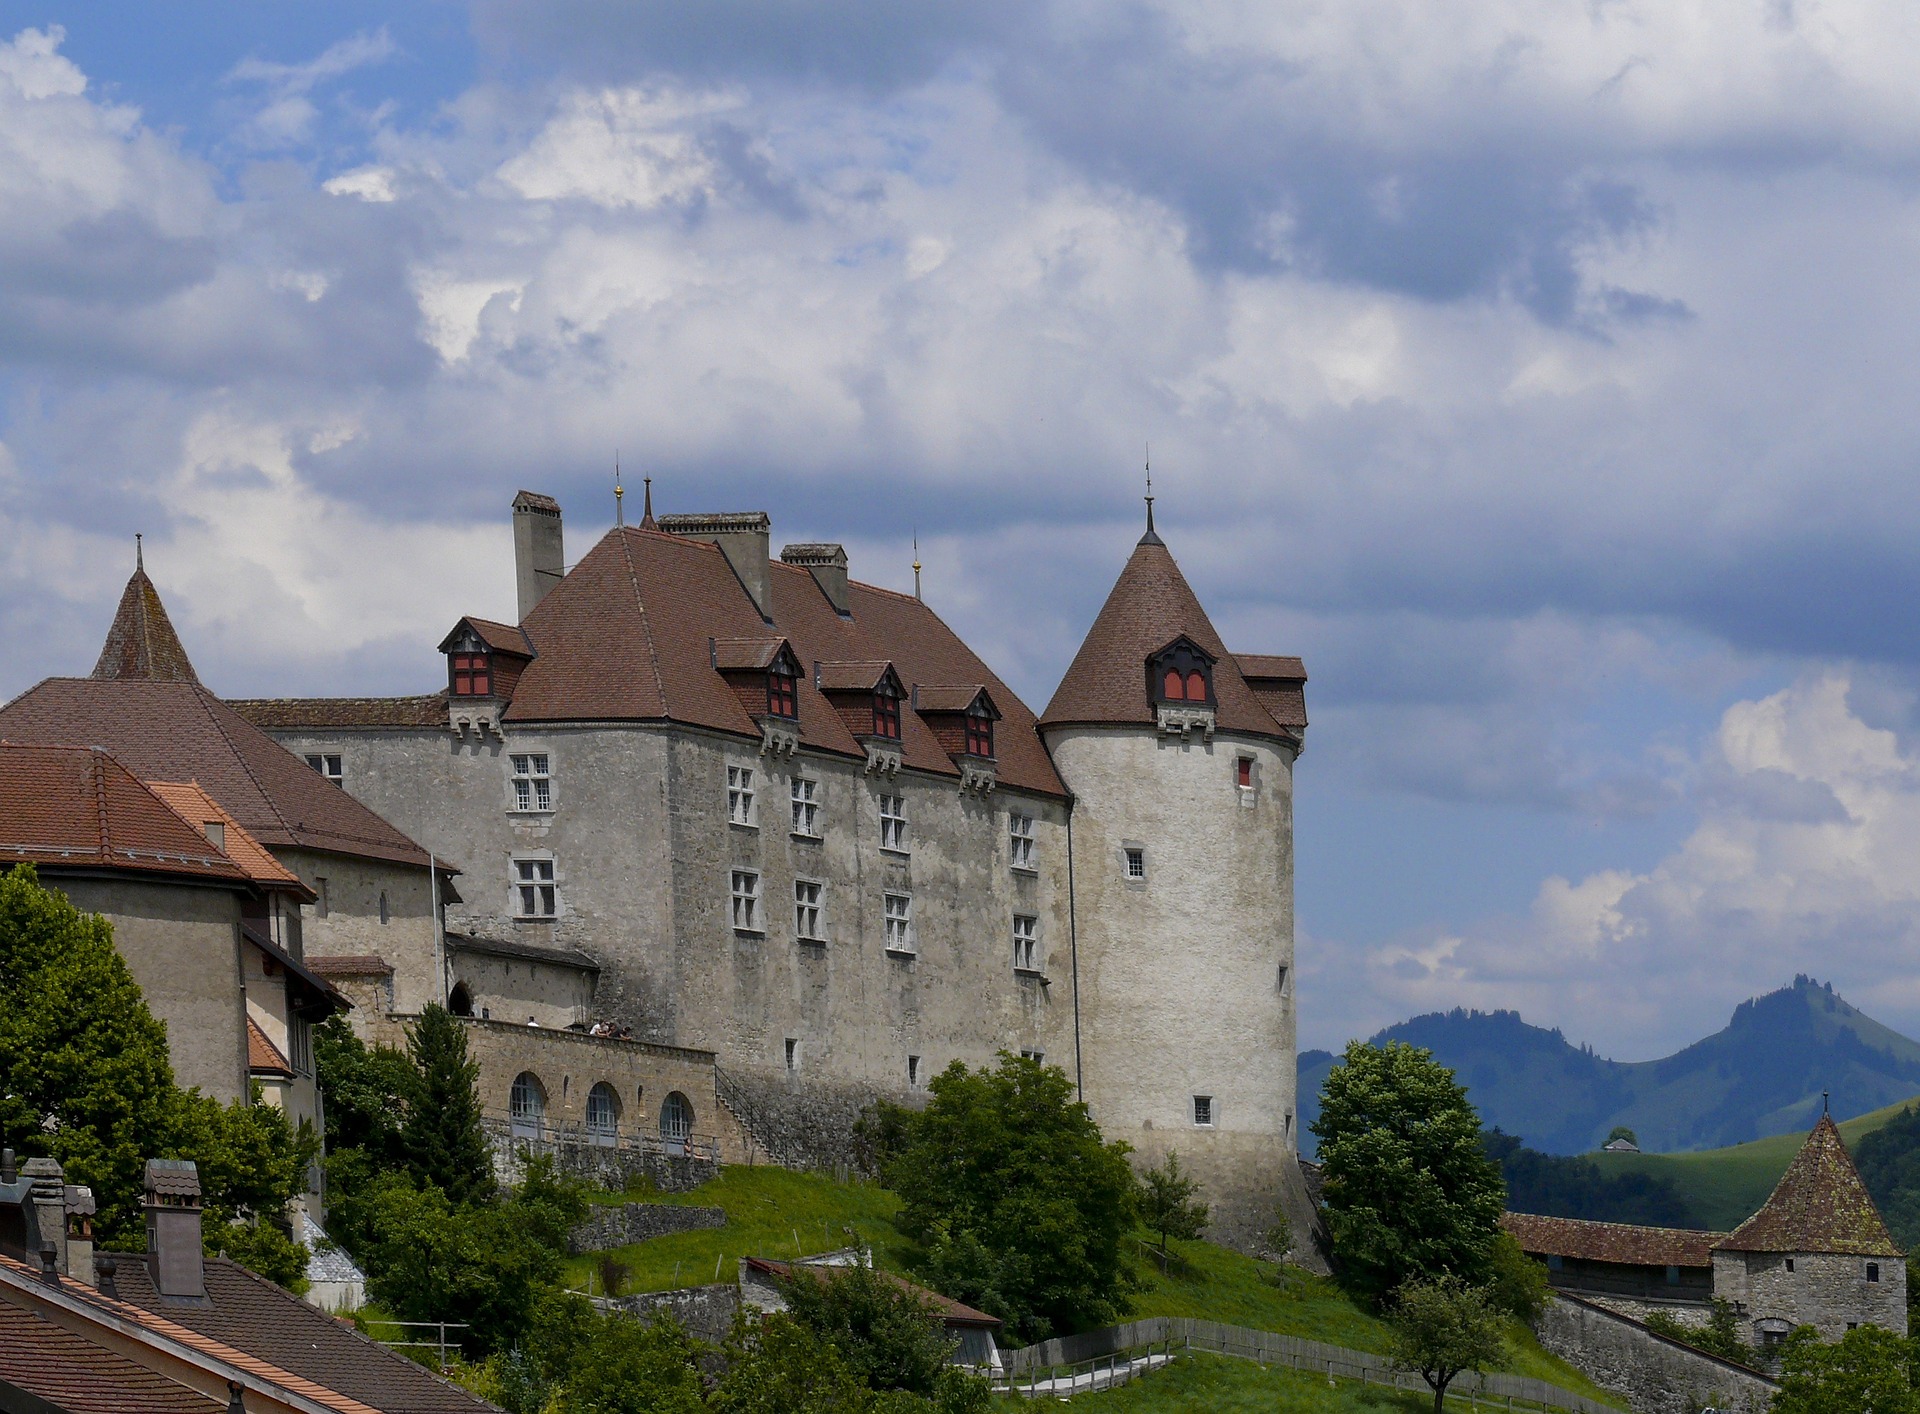 Spectacular Switzerland - Gruyère Castle, Switzerland